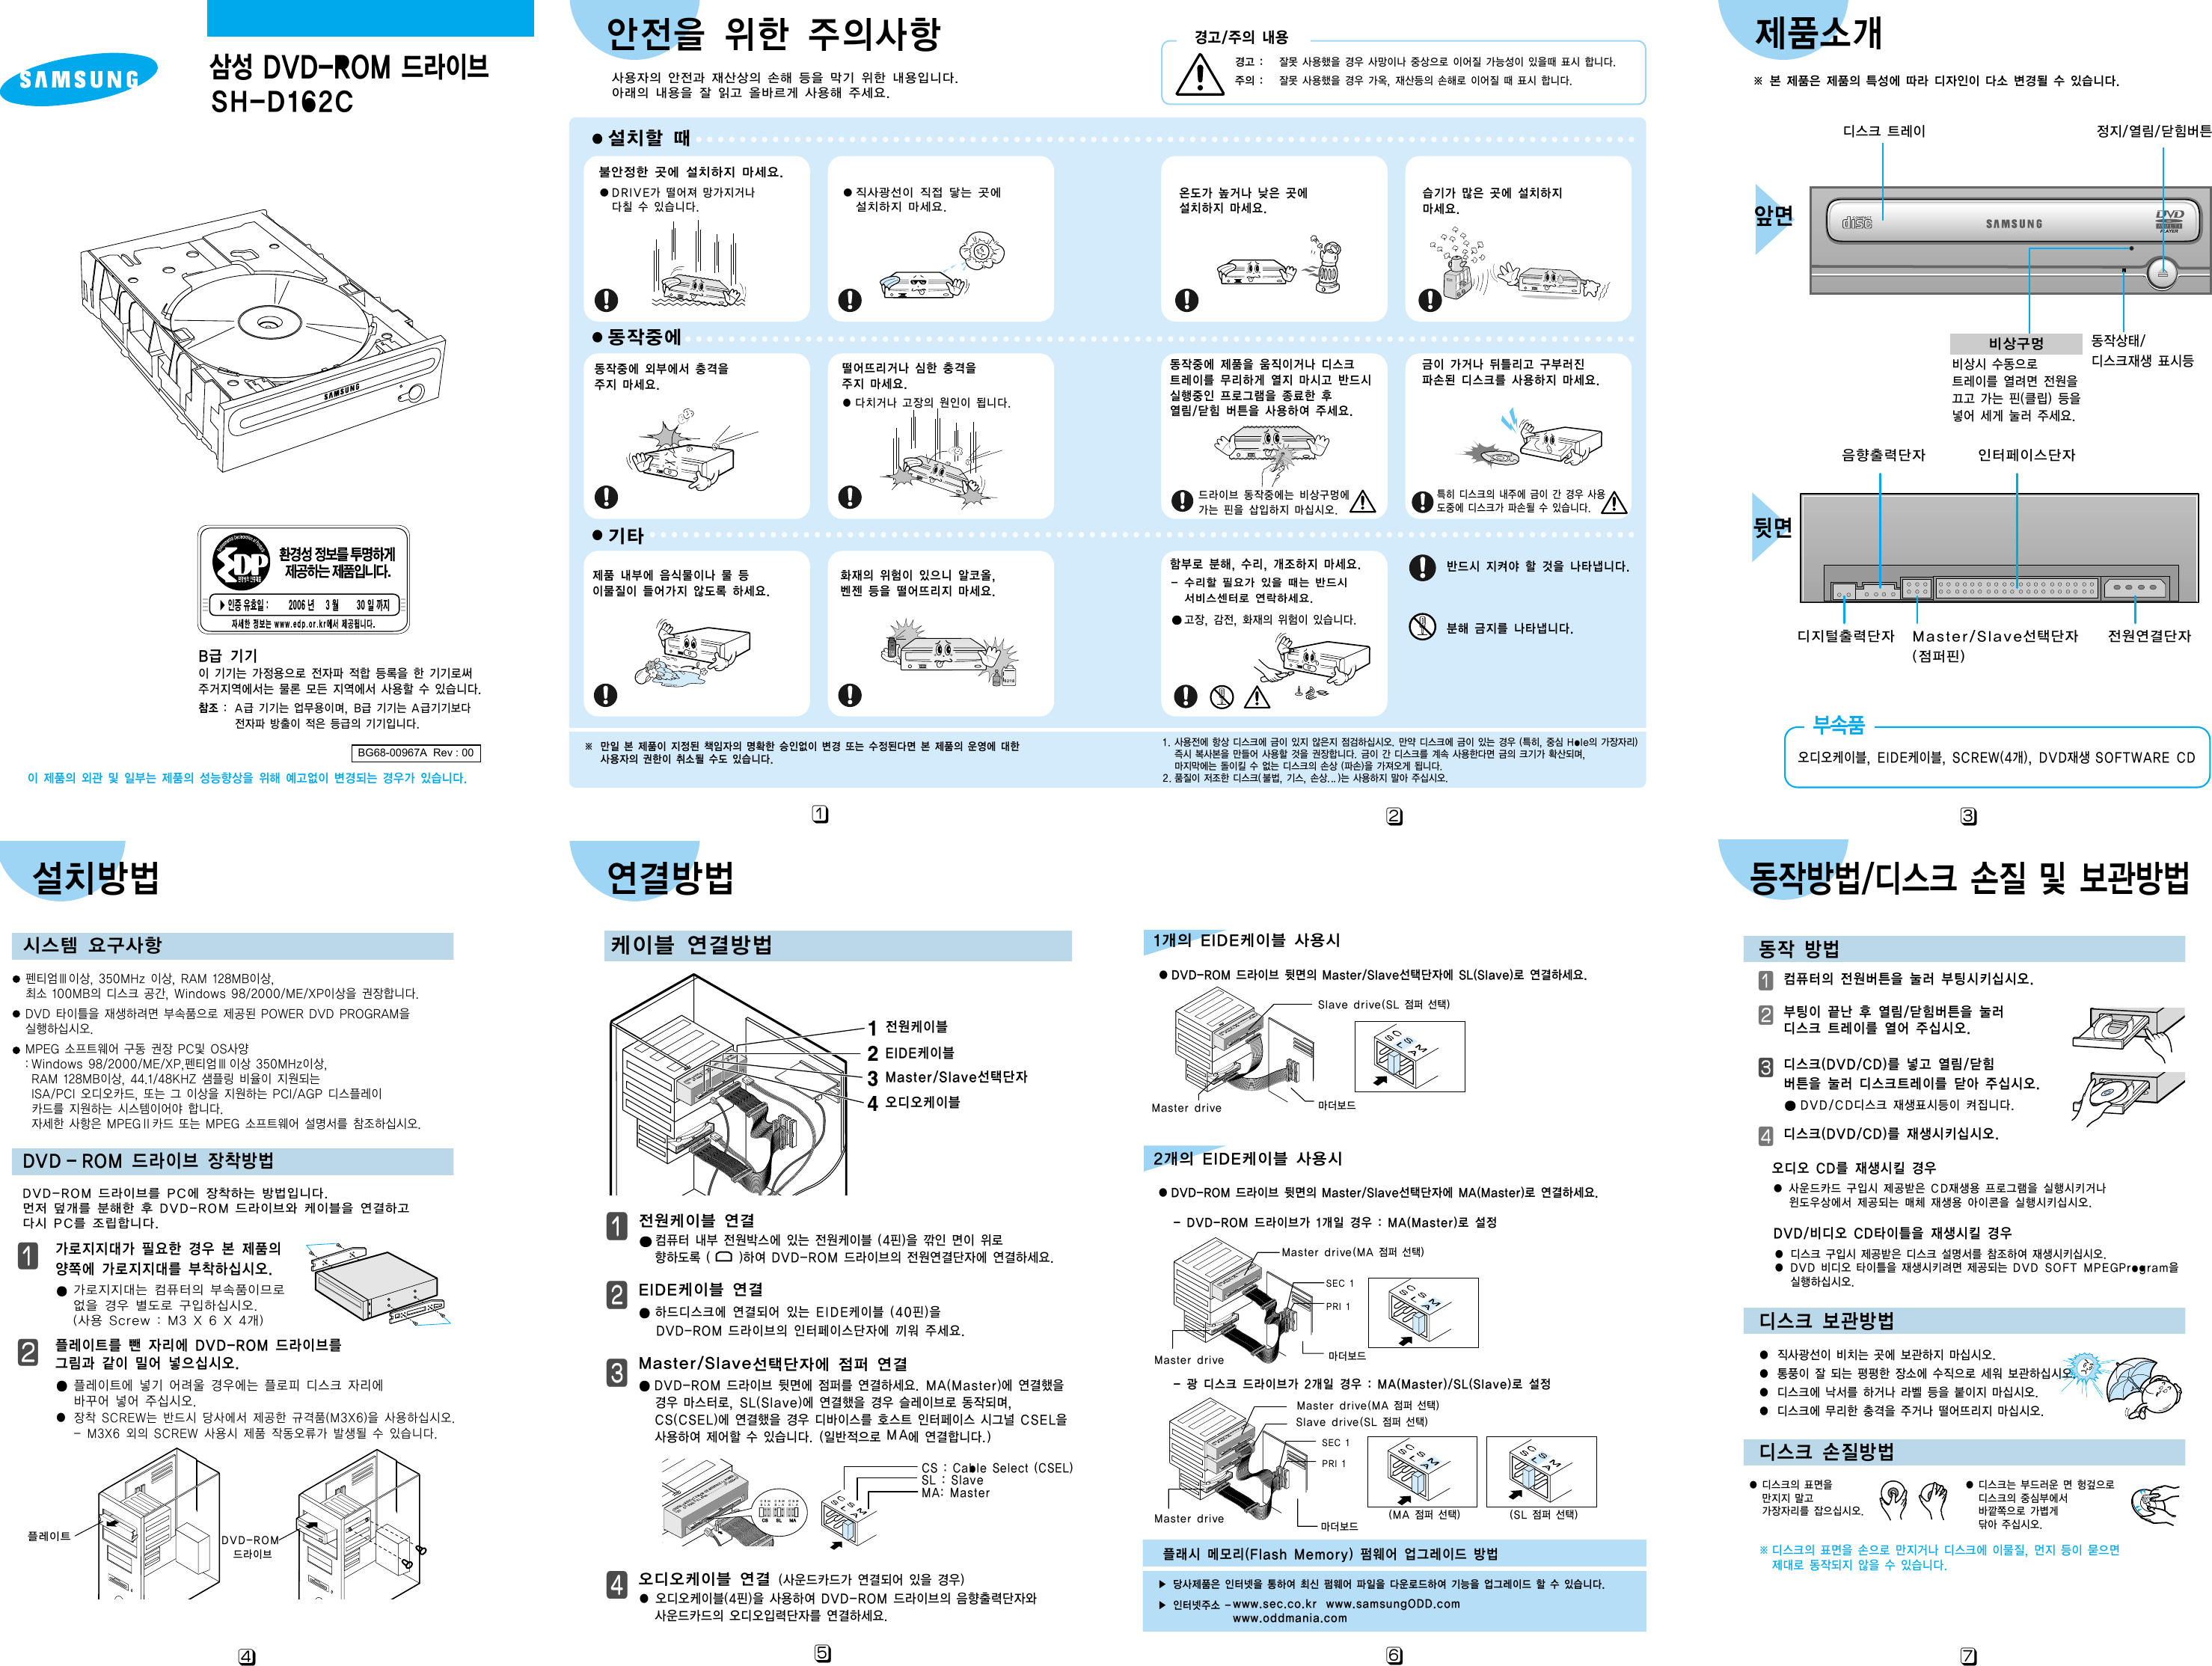 samsung j810m ds user manual pdf